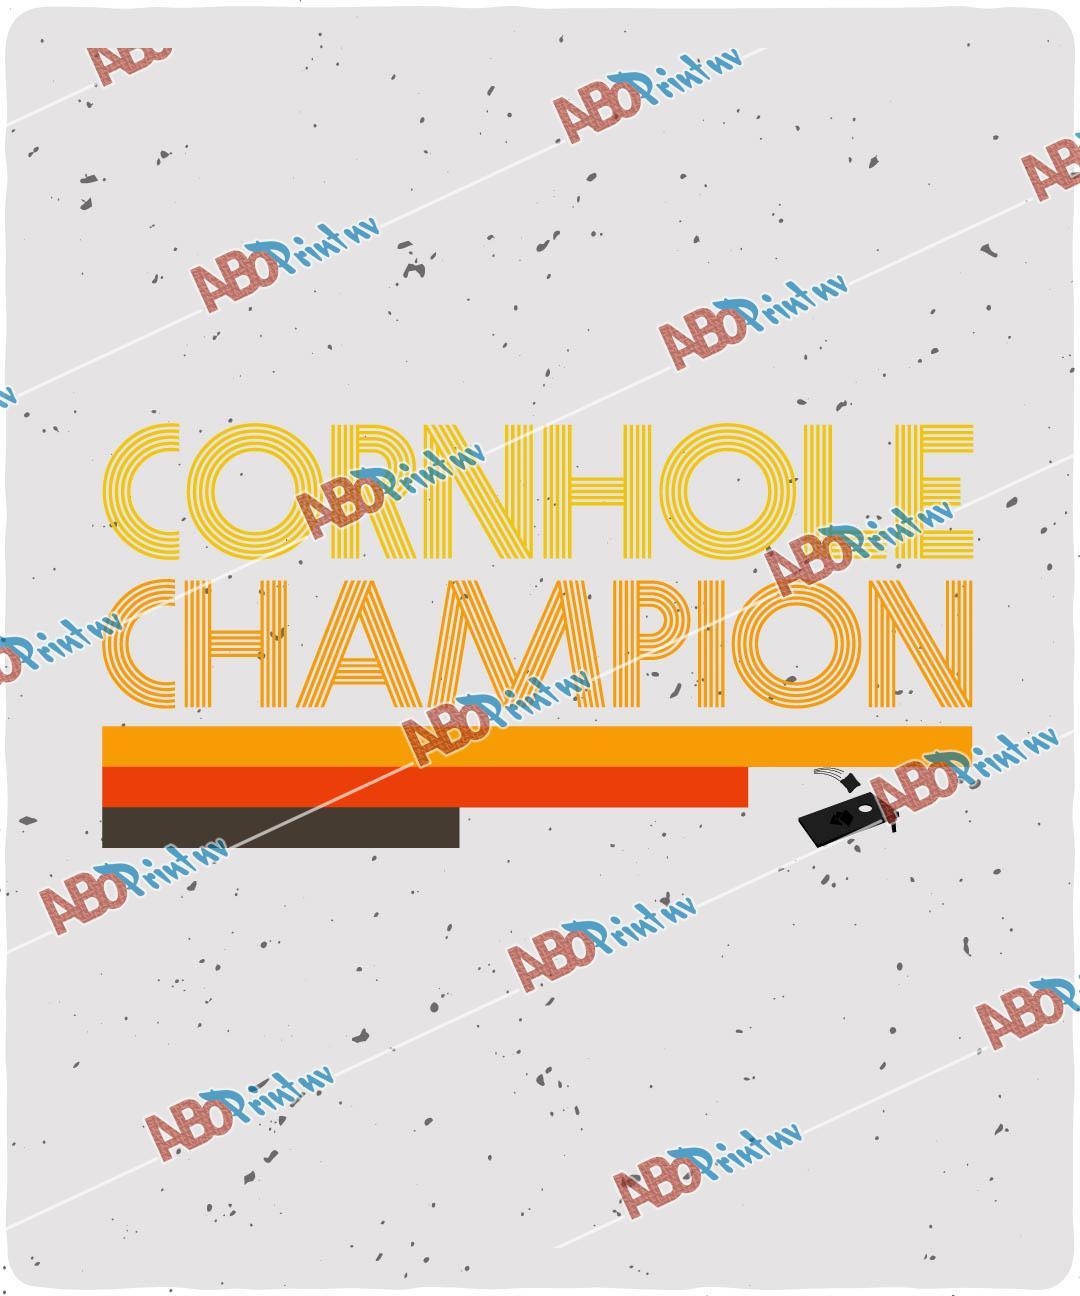 Cornhole Champion.jpg